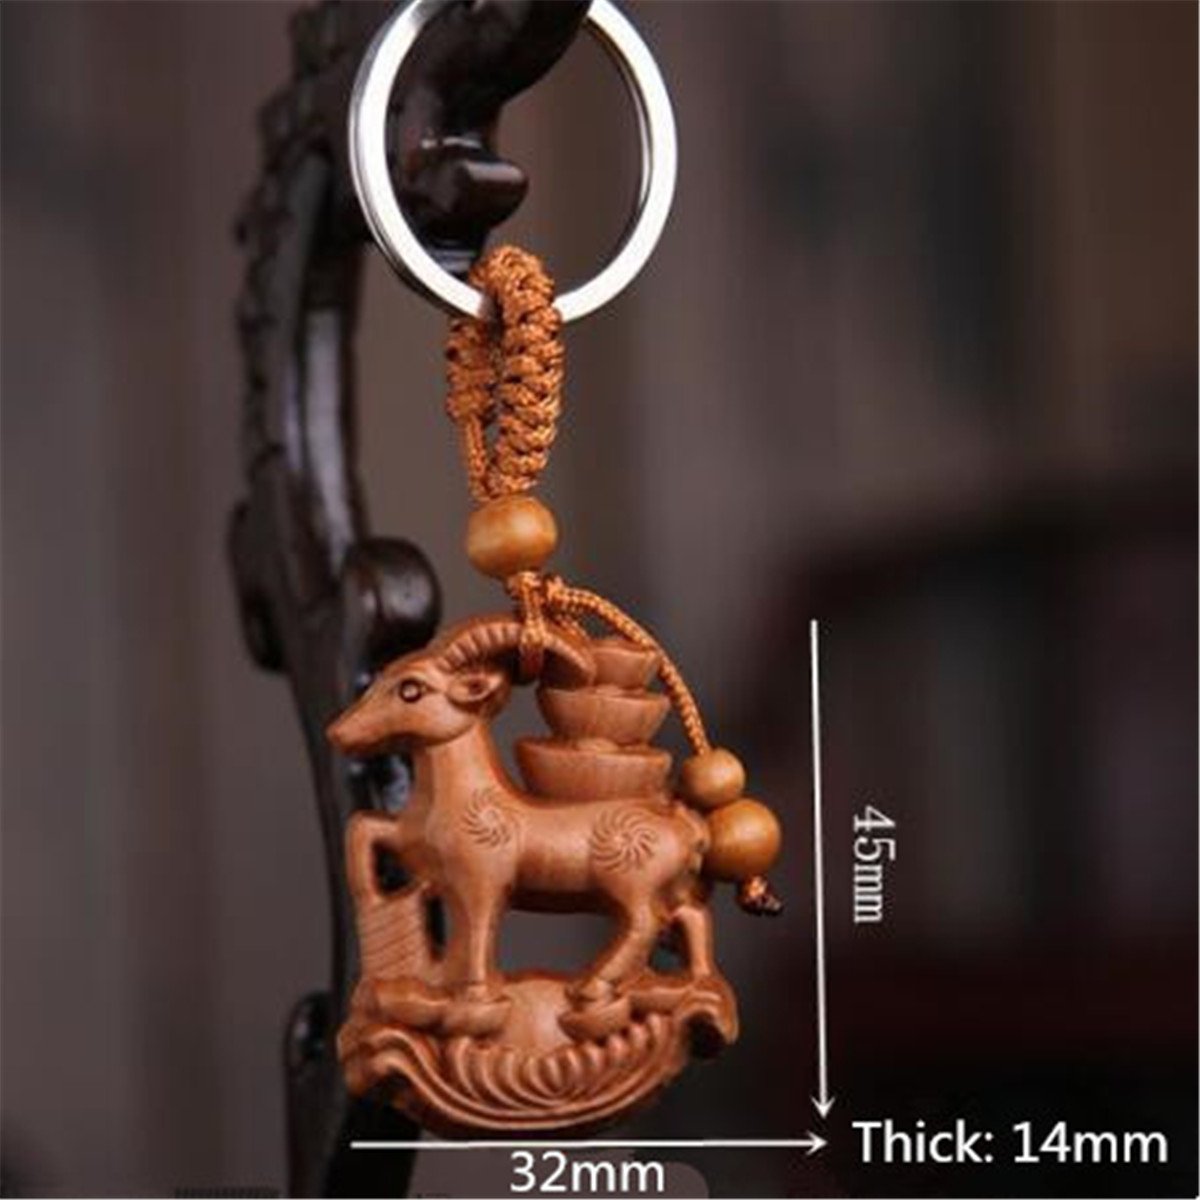 12 Chinese Zodiac Animal Statue Key Chain - Perfect Gift Item